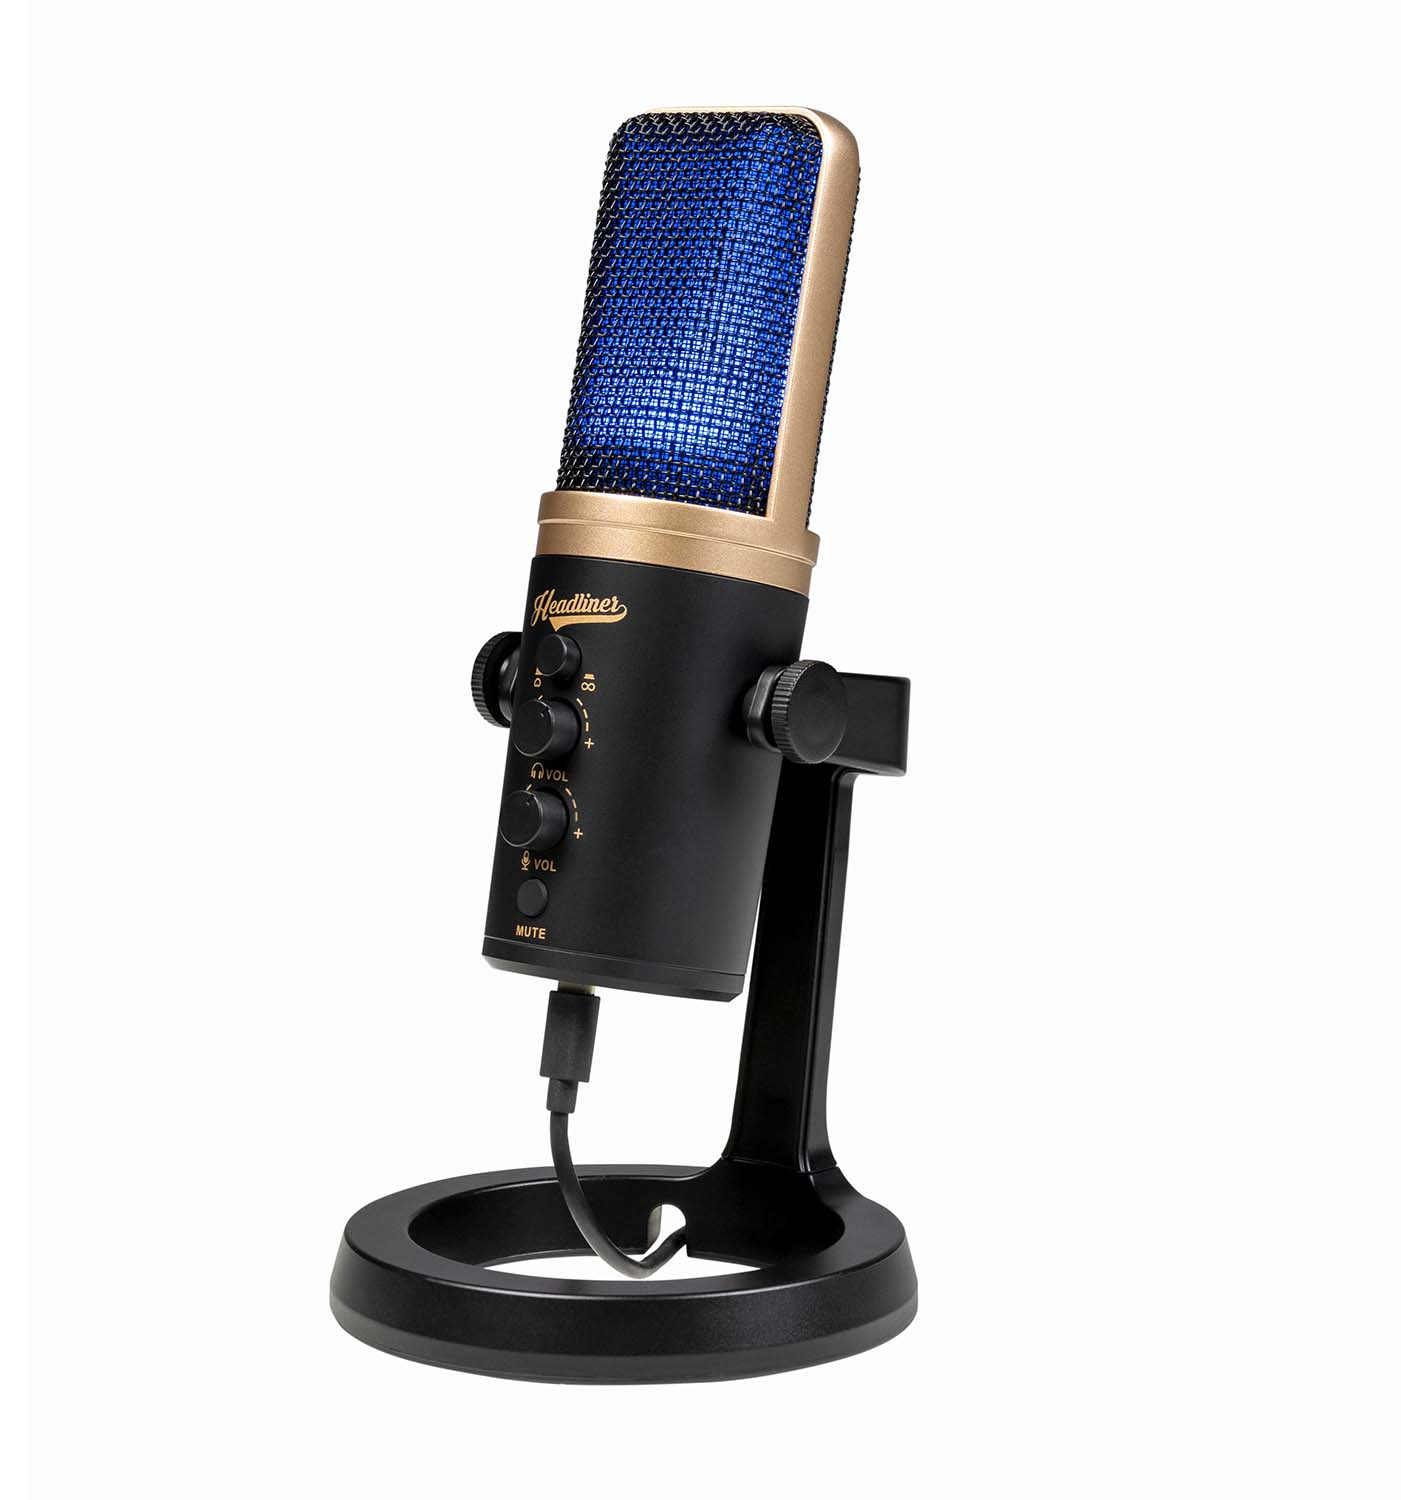 Headliner HL90510 Roxy Stereo USB Condenser Microphone - Podcast - Hollywood DJ